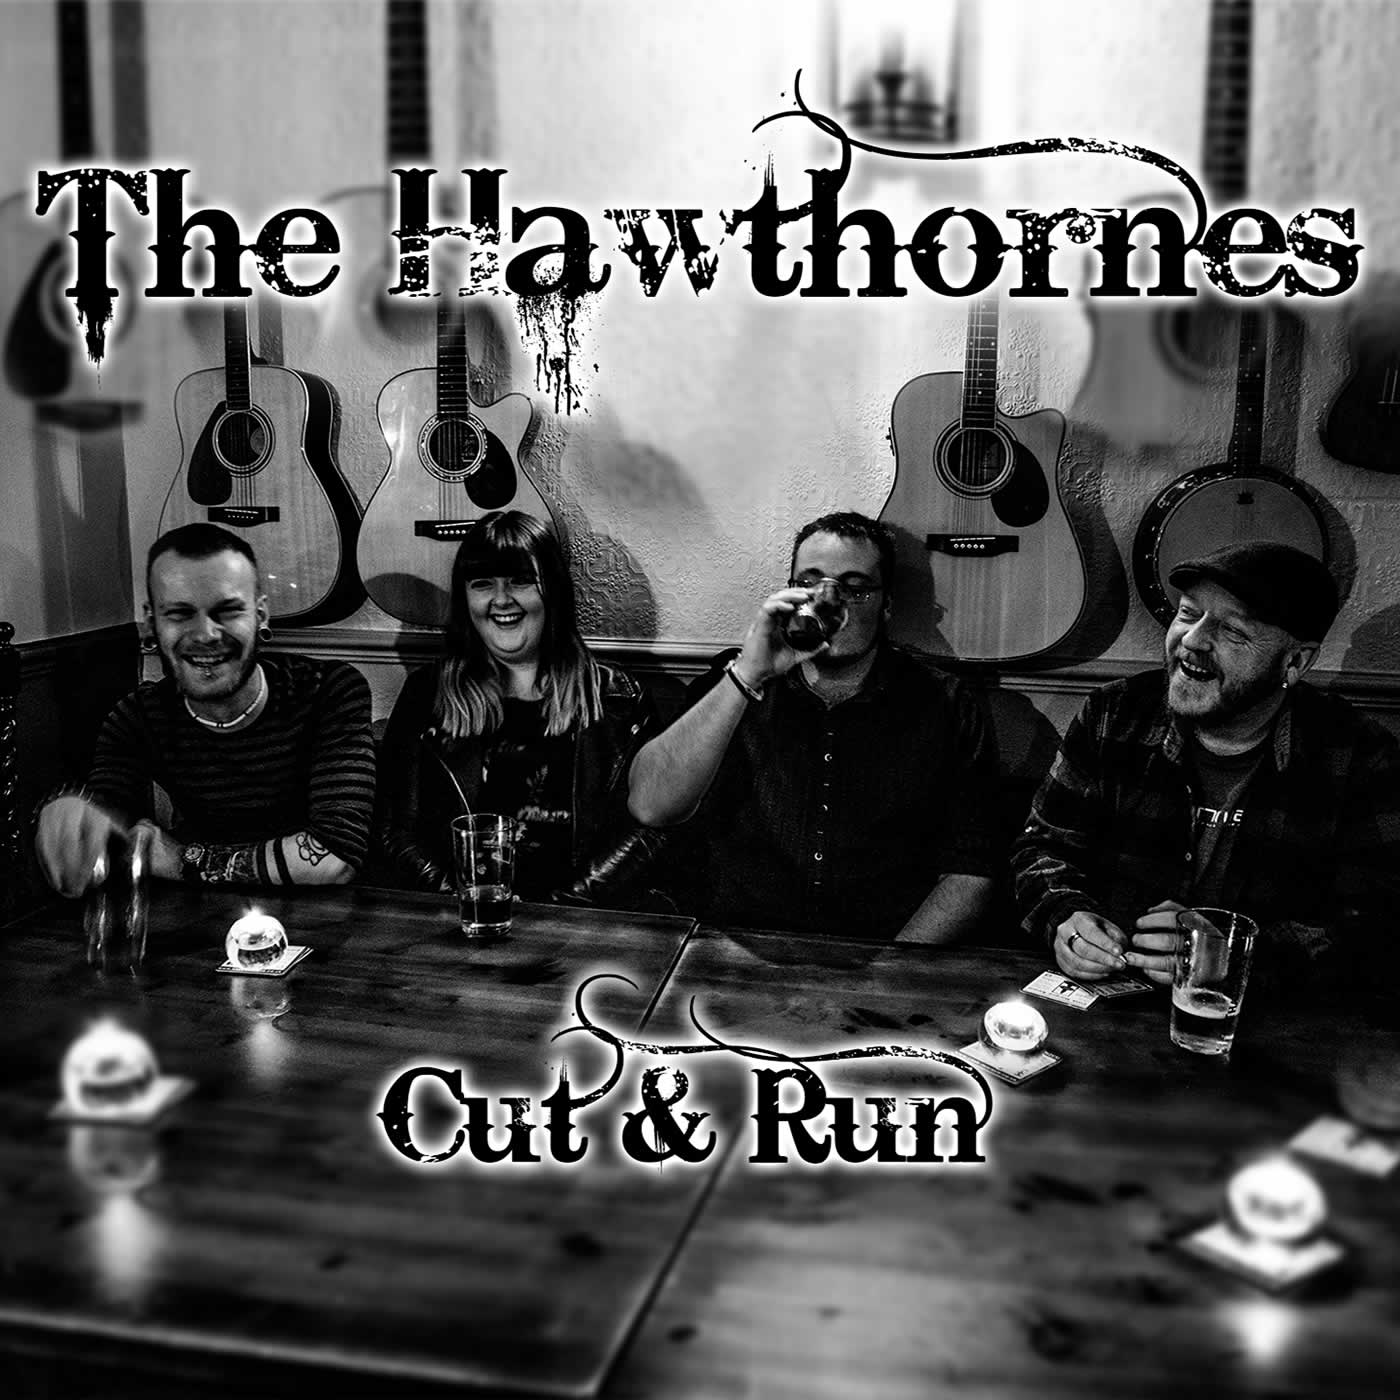 The Hawthornes album cover for Cut & Run